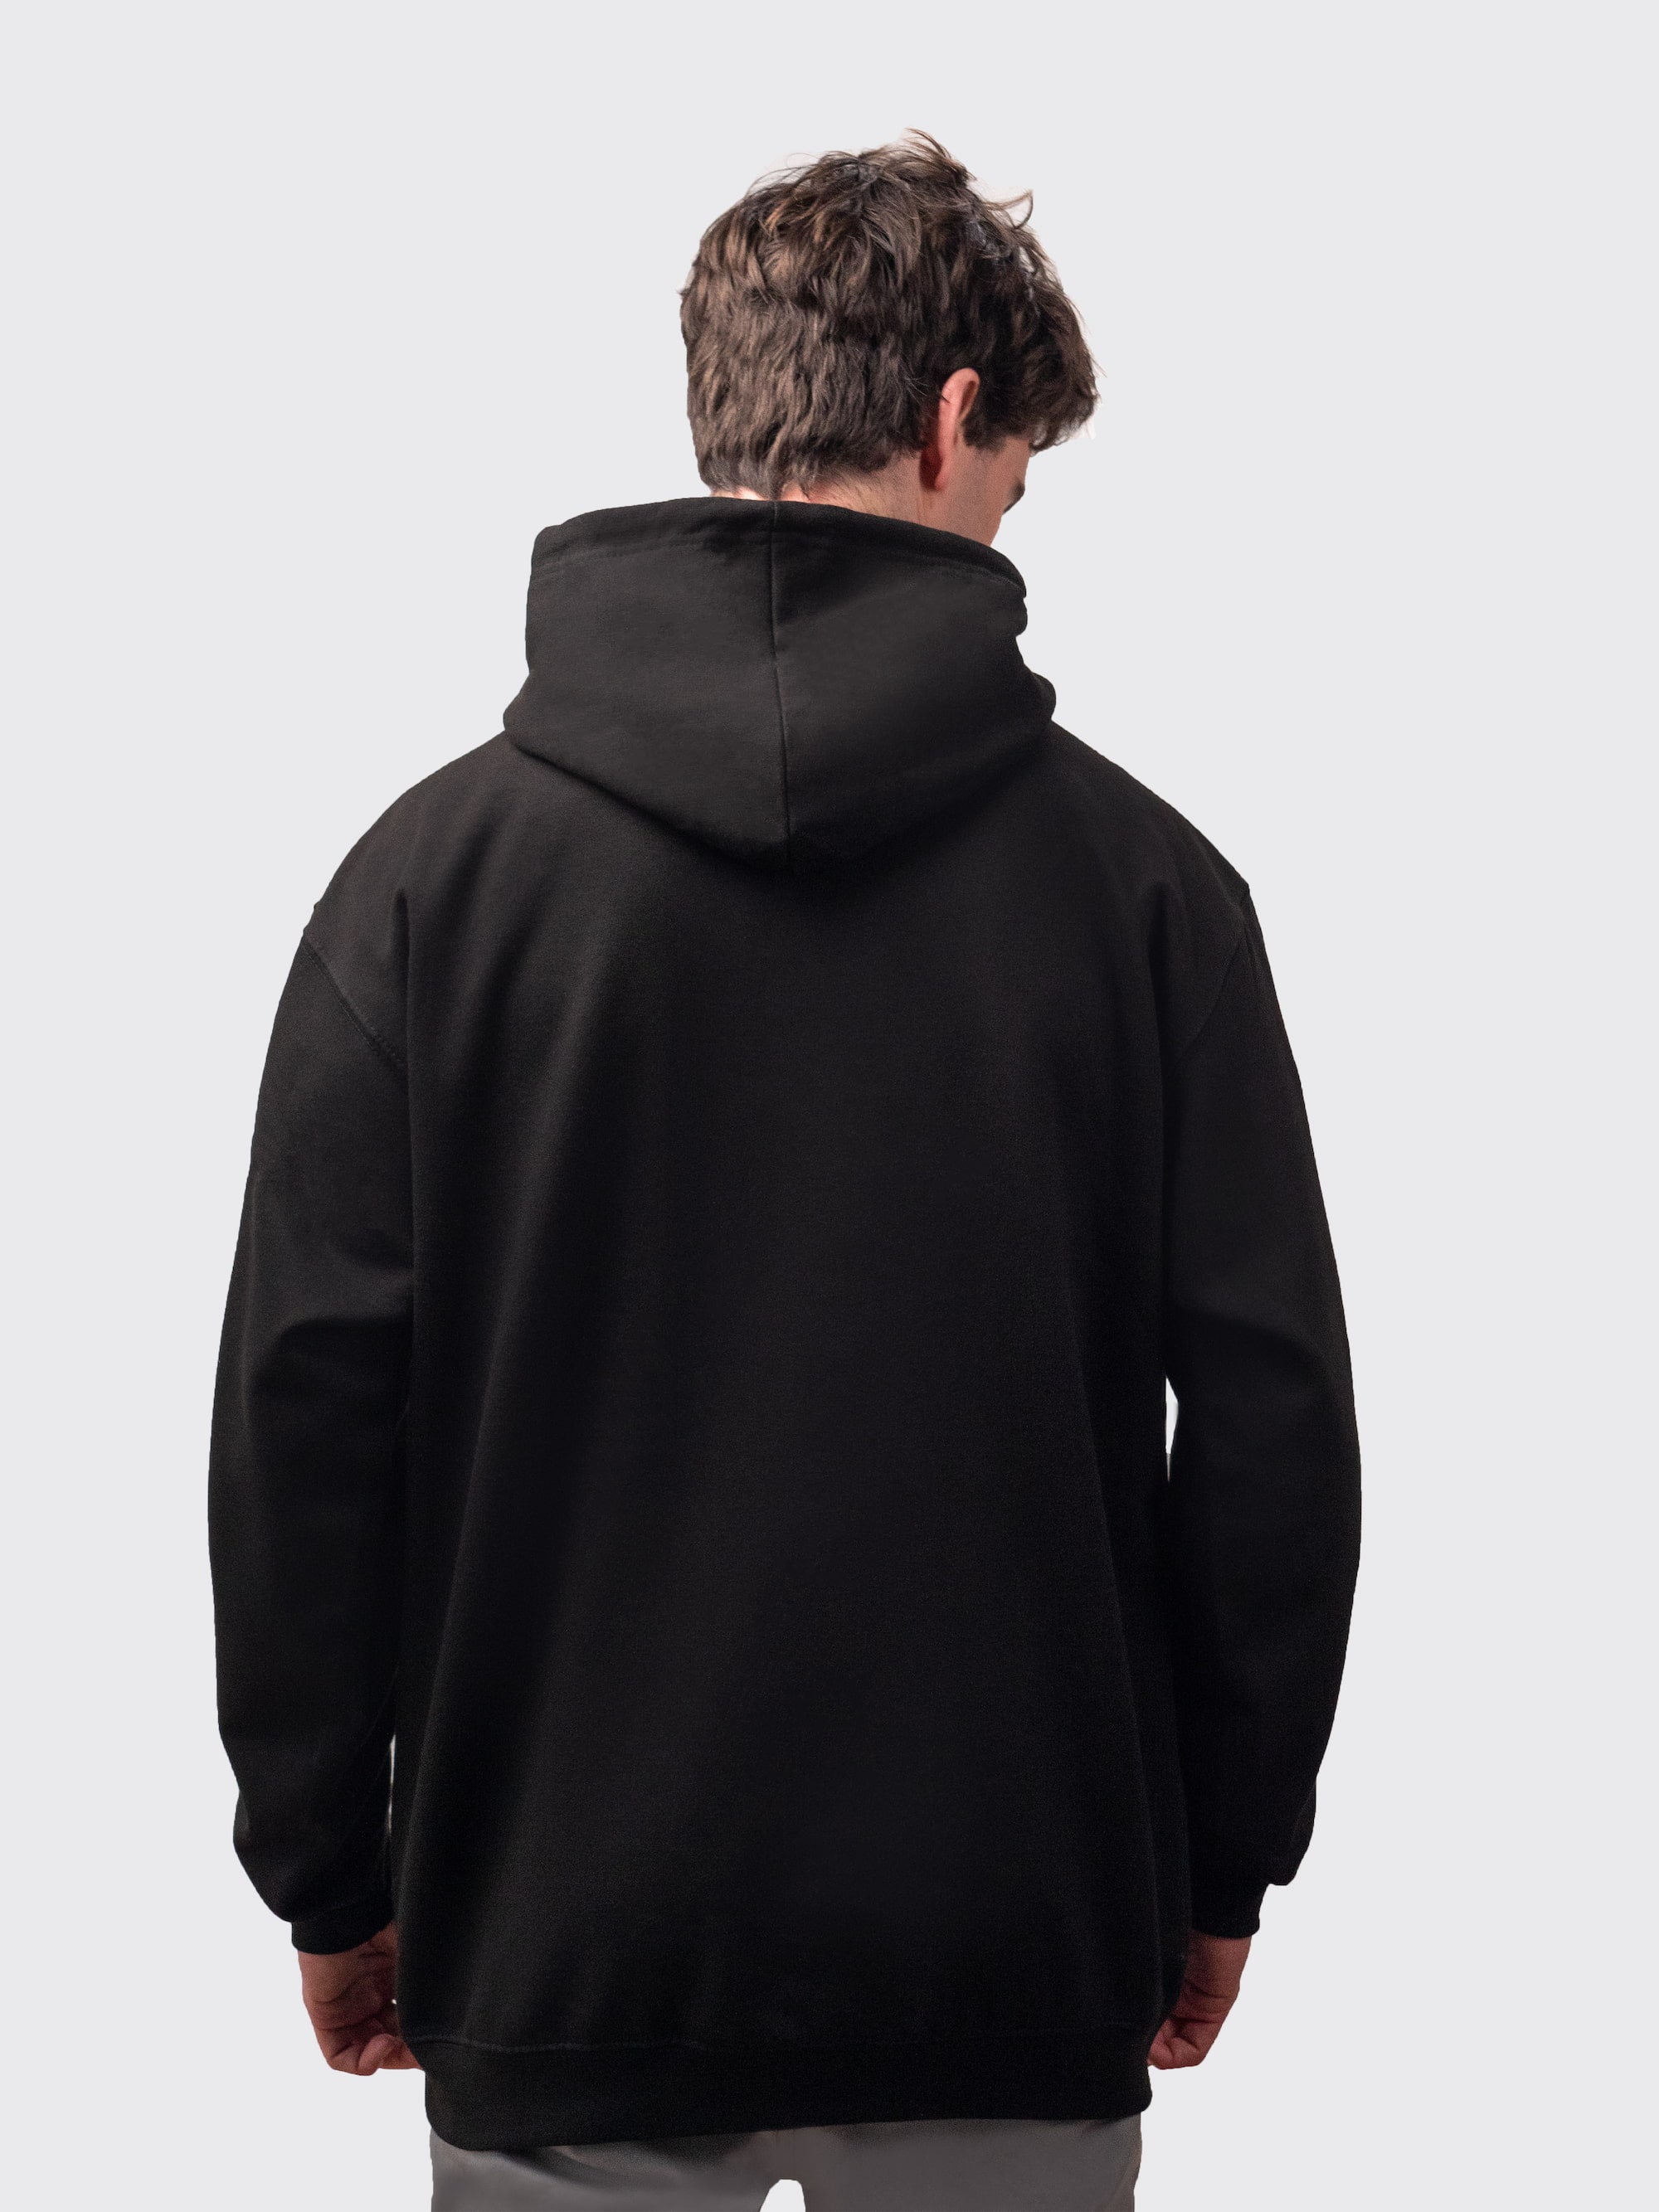 Black drop-shoulder hoodie, for undergrad students